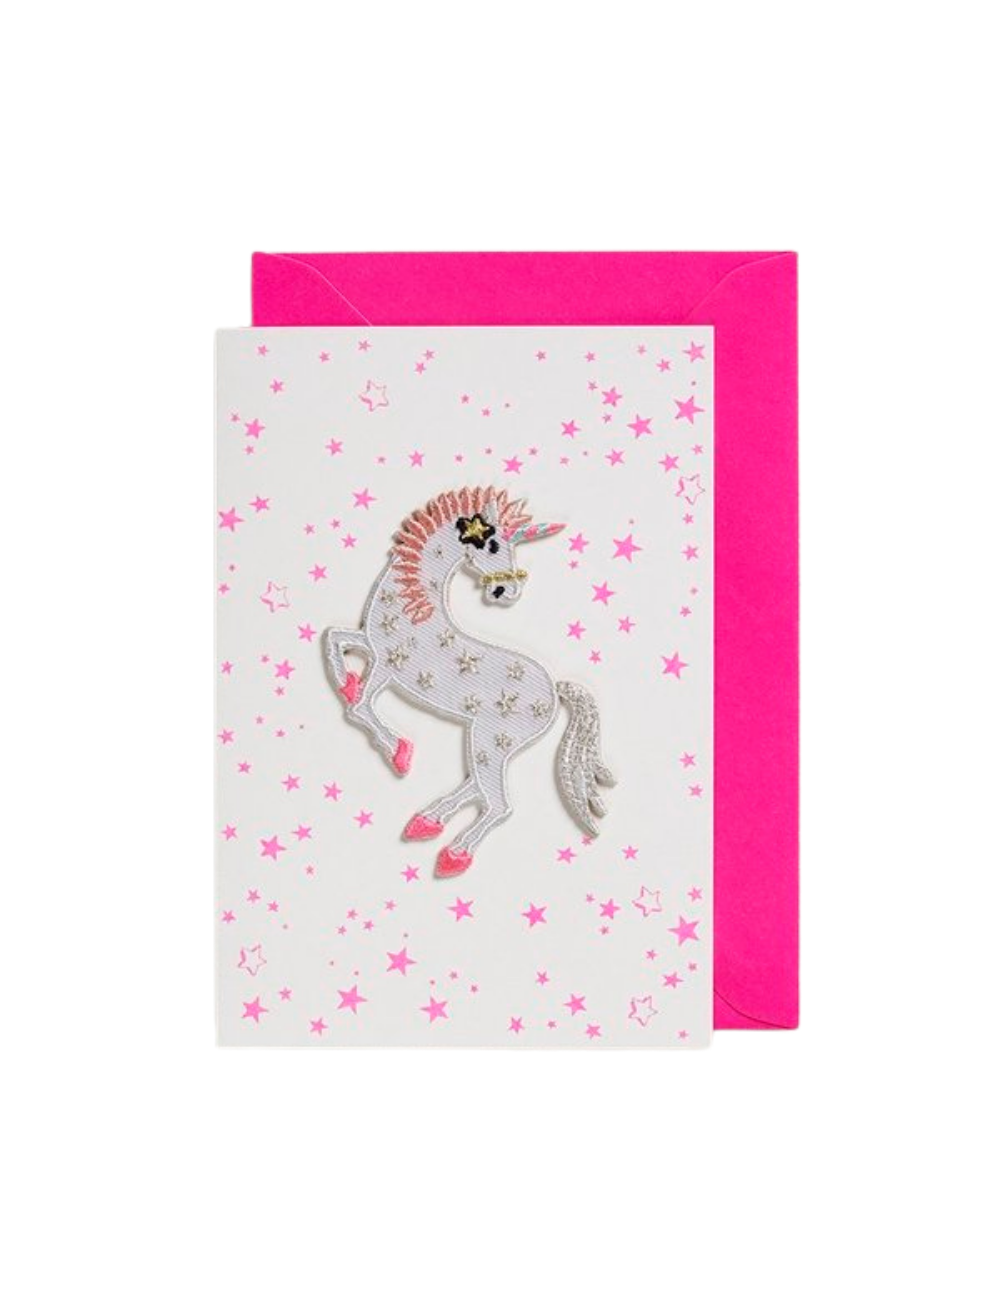 Patch Cards - Unicorn Stars